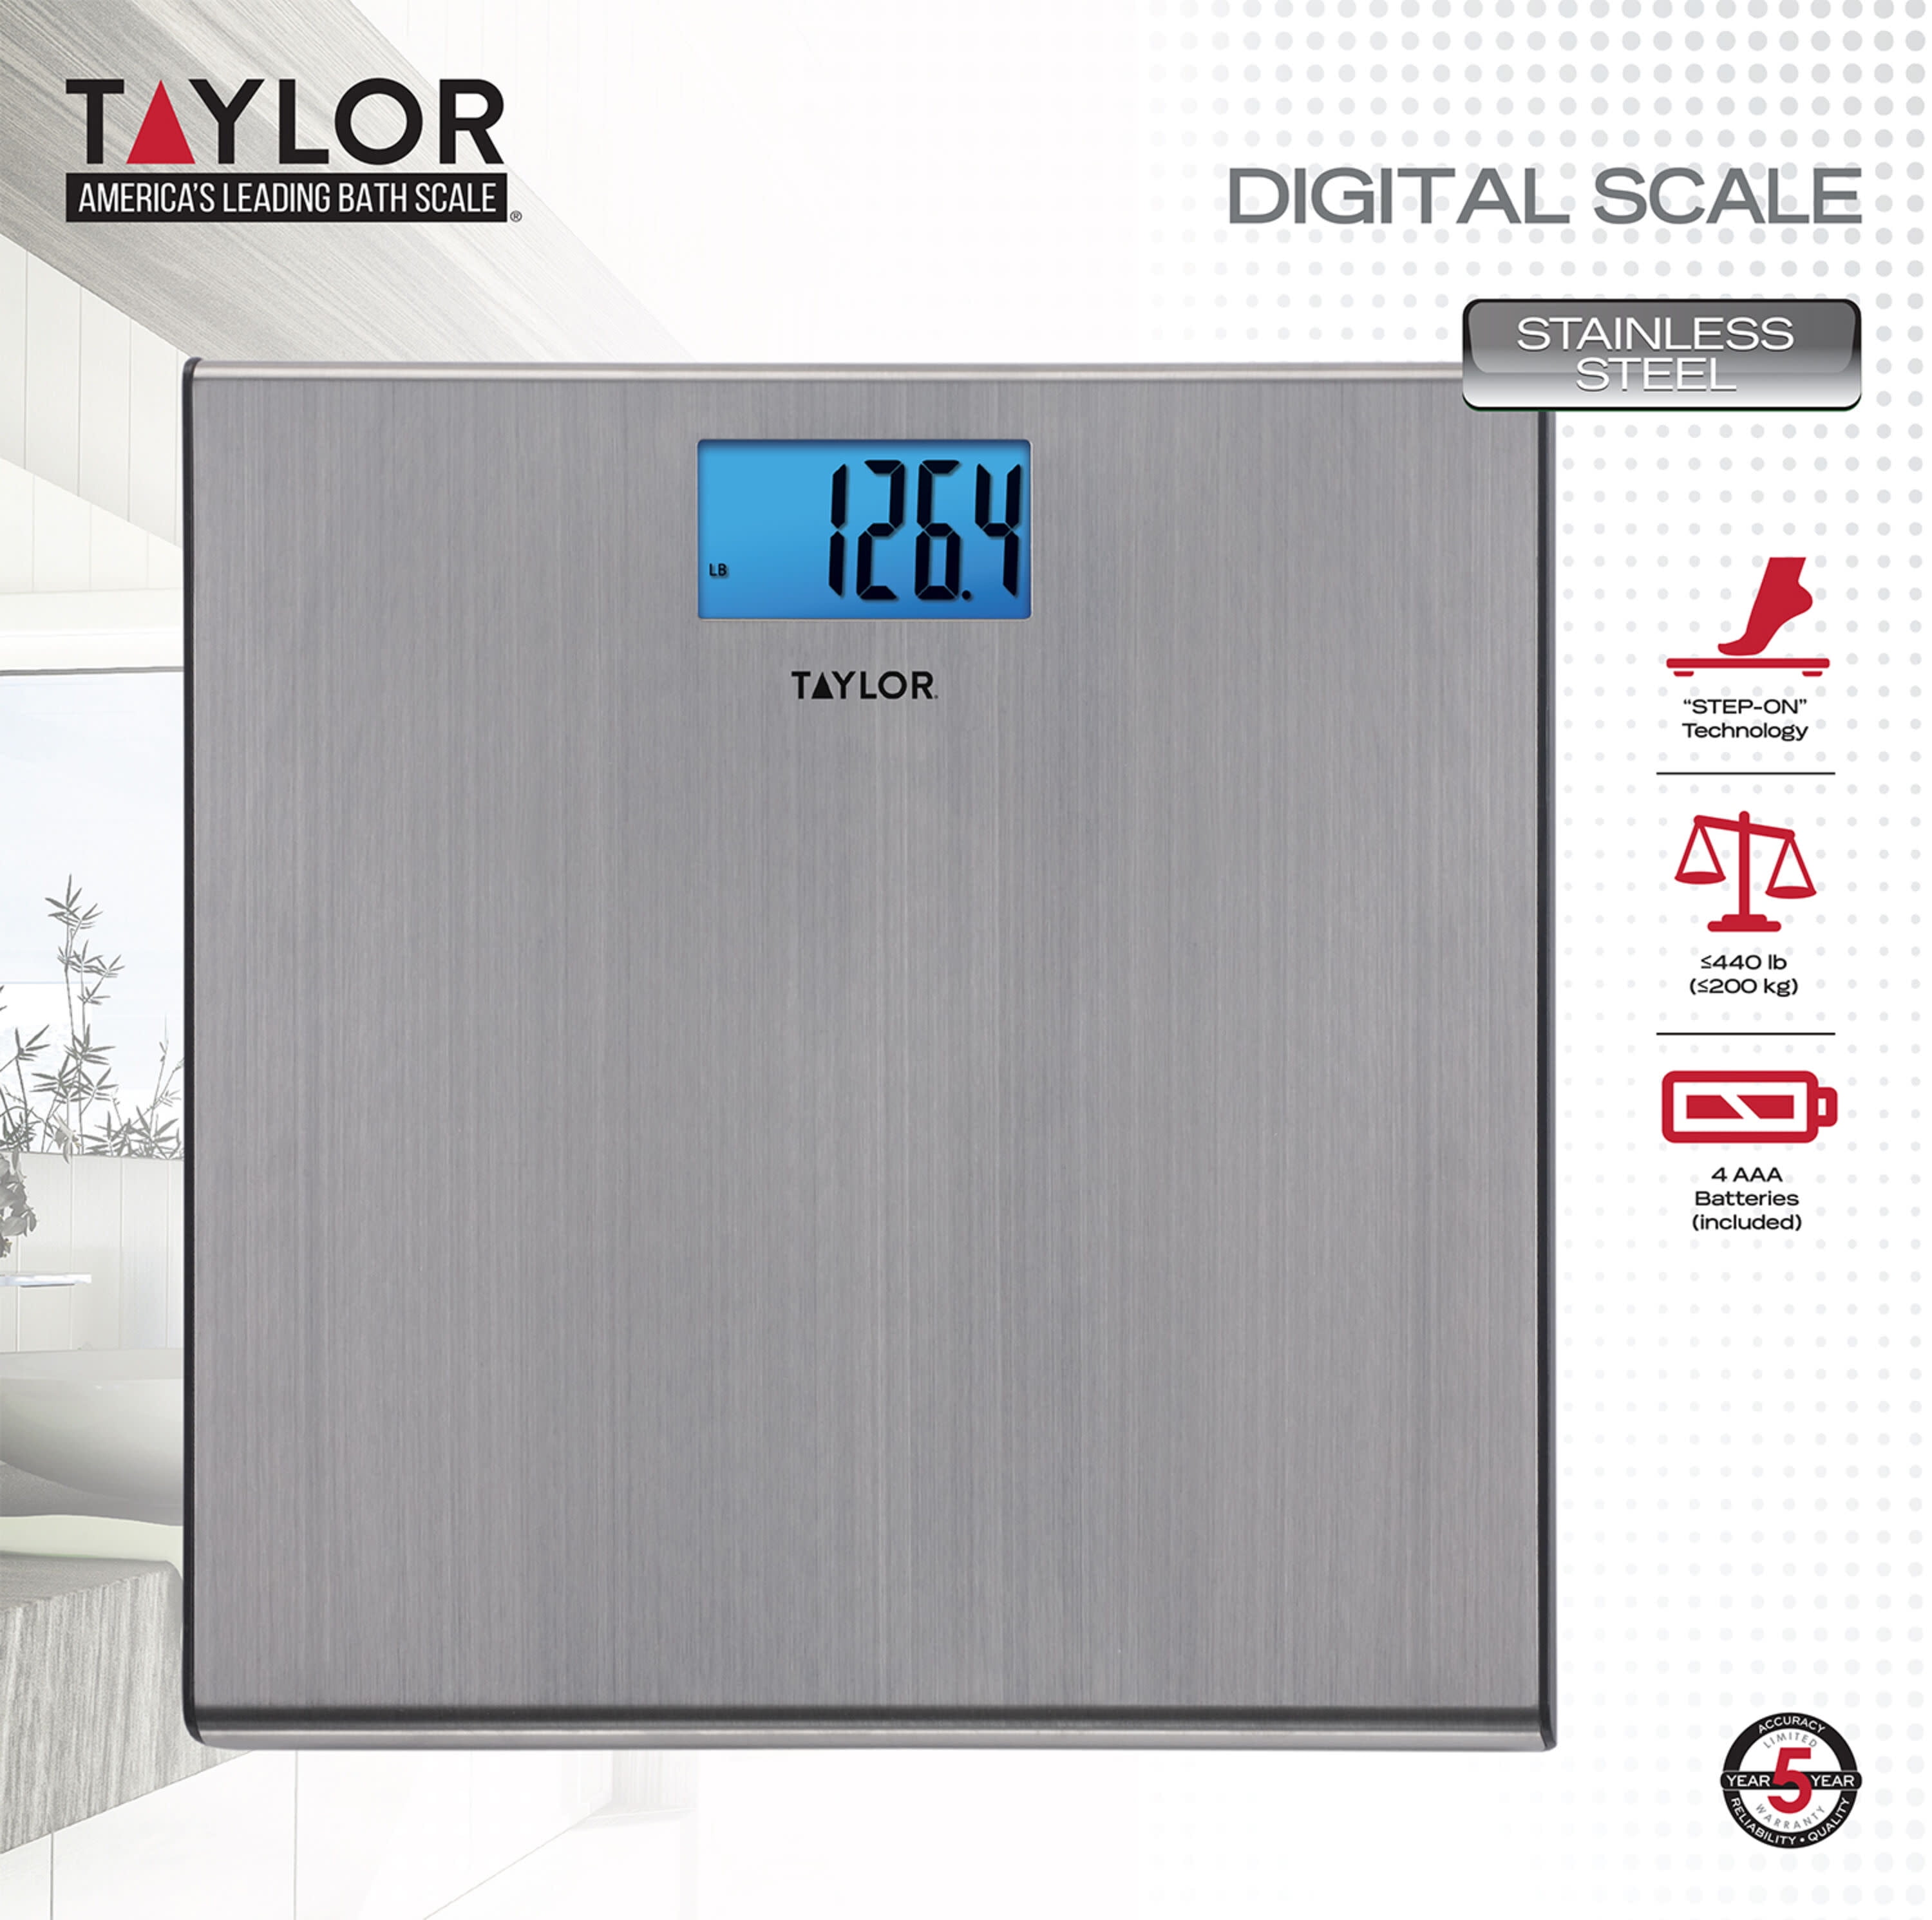 Digital Thin Stainless Steel Bathroom Scale - Taylor : Target